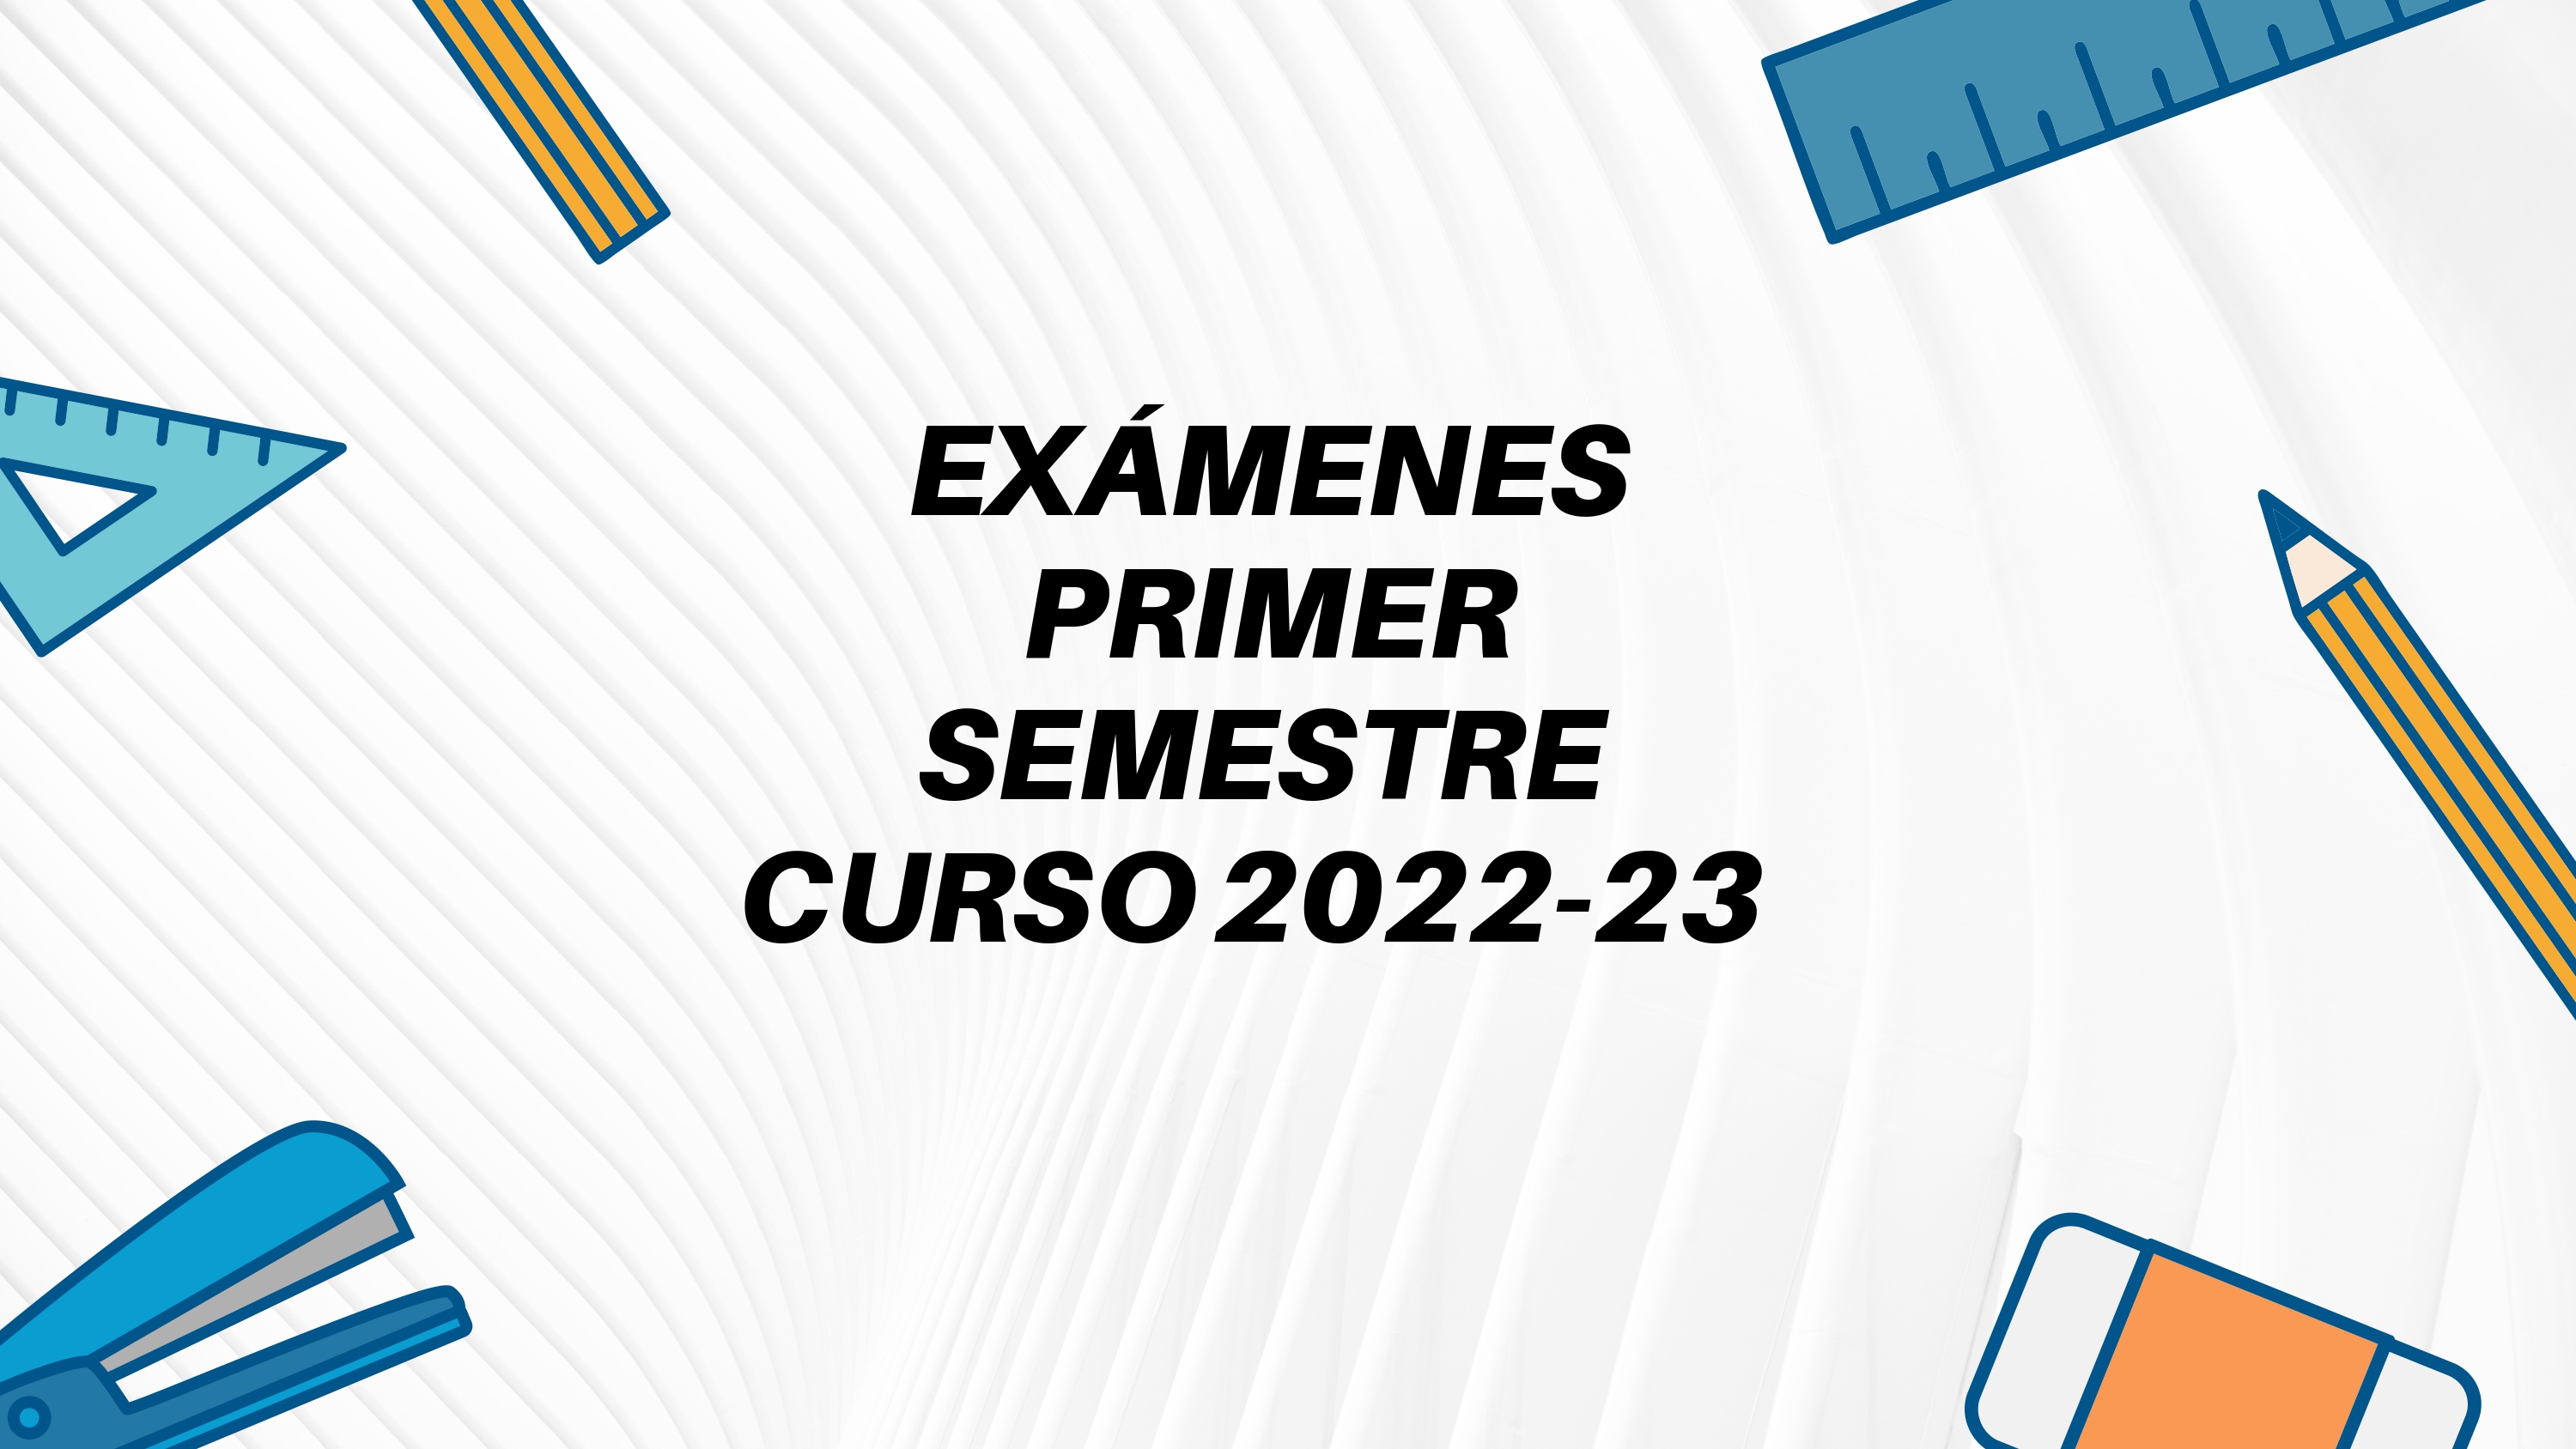 EXÁMENES PRIMER SEMESTRE CURSO 2022-23